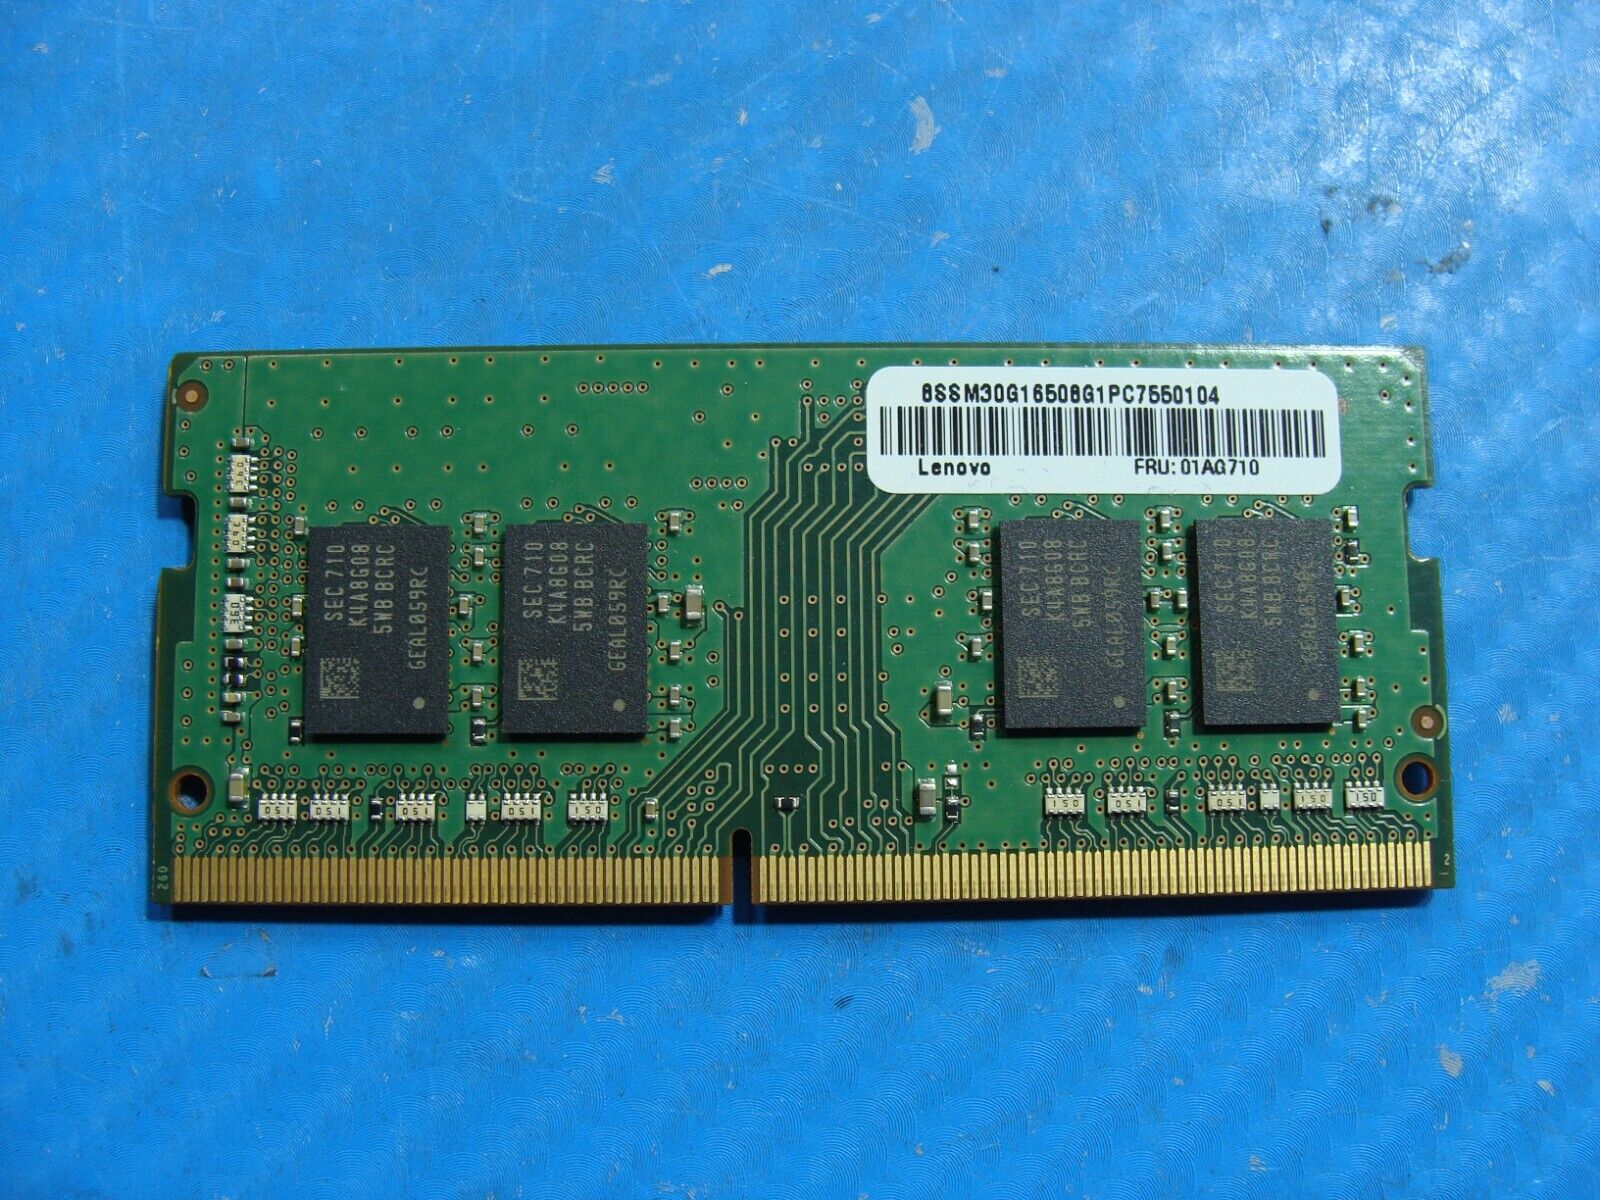 Lenovo T470s Samsung 8GB 1Rx8 PC4-2400T Memory RAM SO-DIMM M471A1K43BB1-CRC